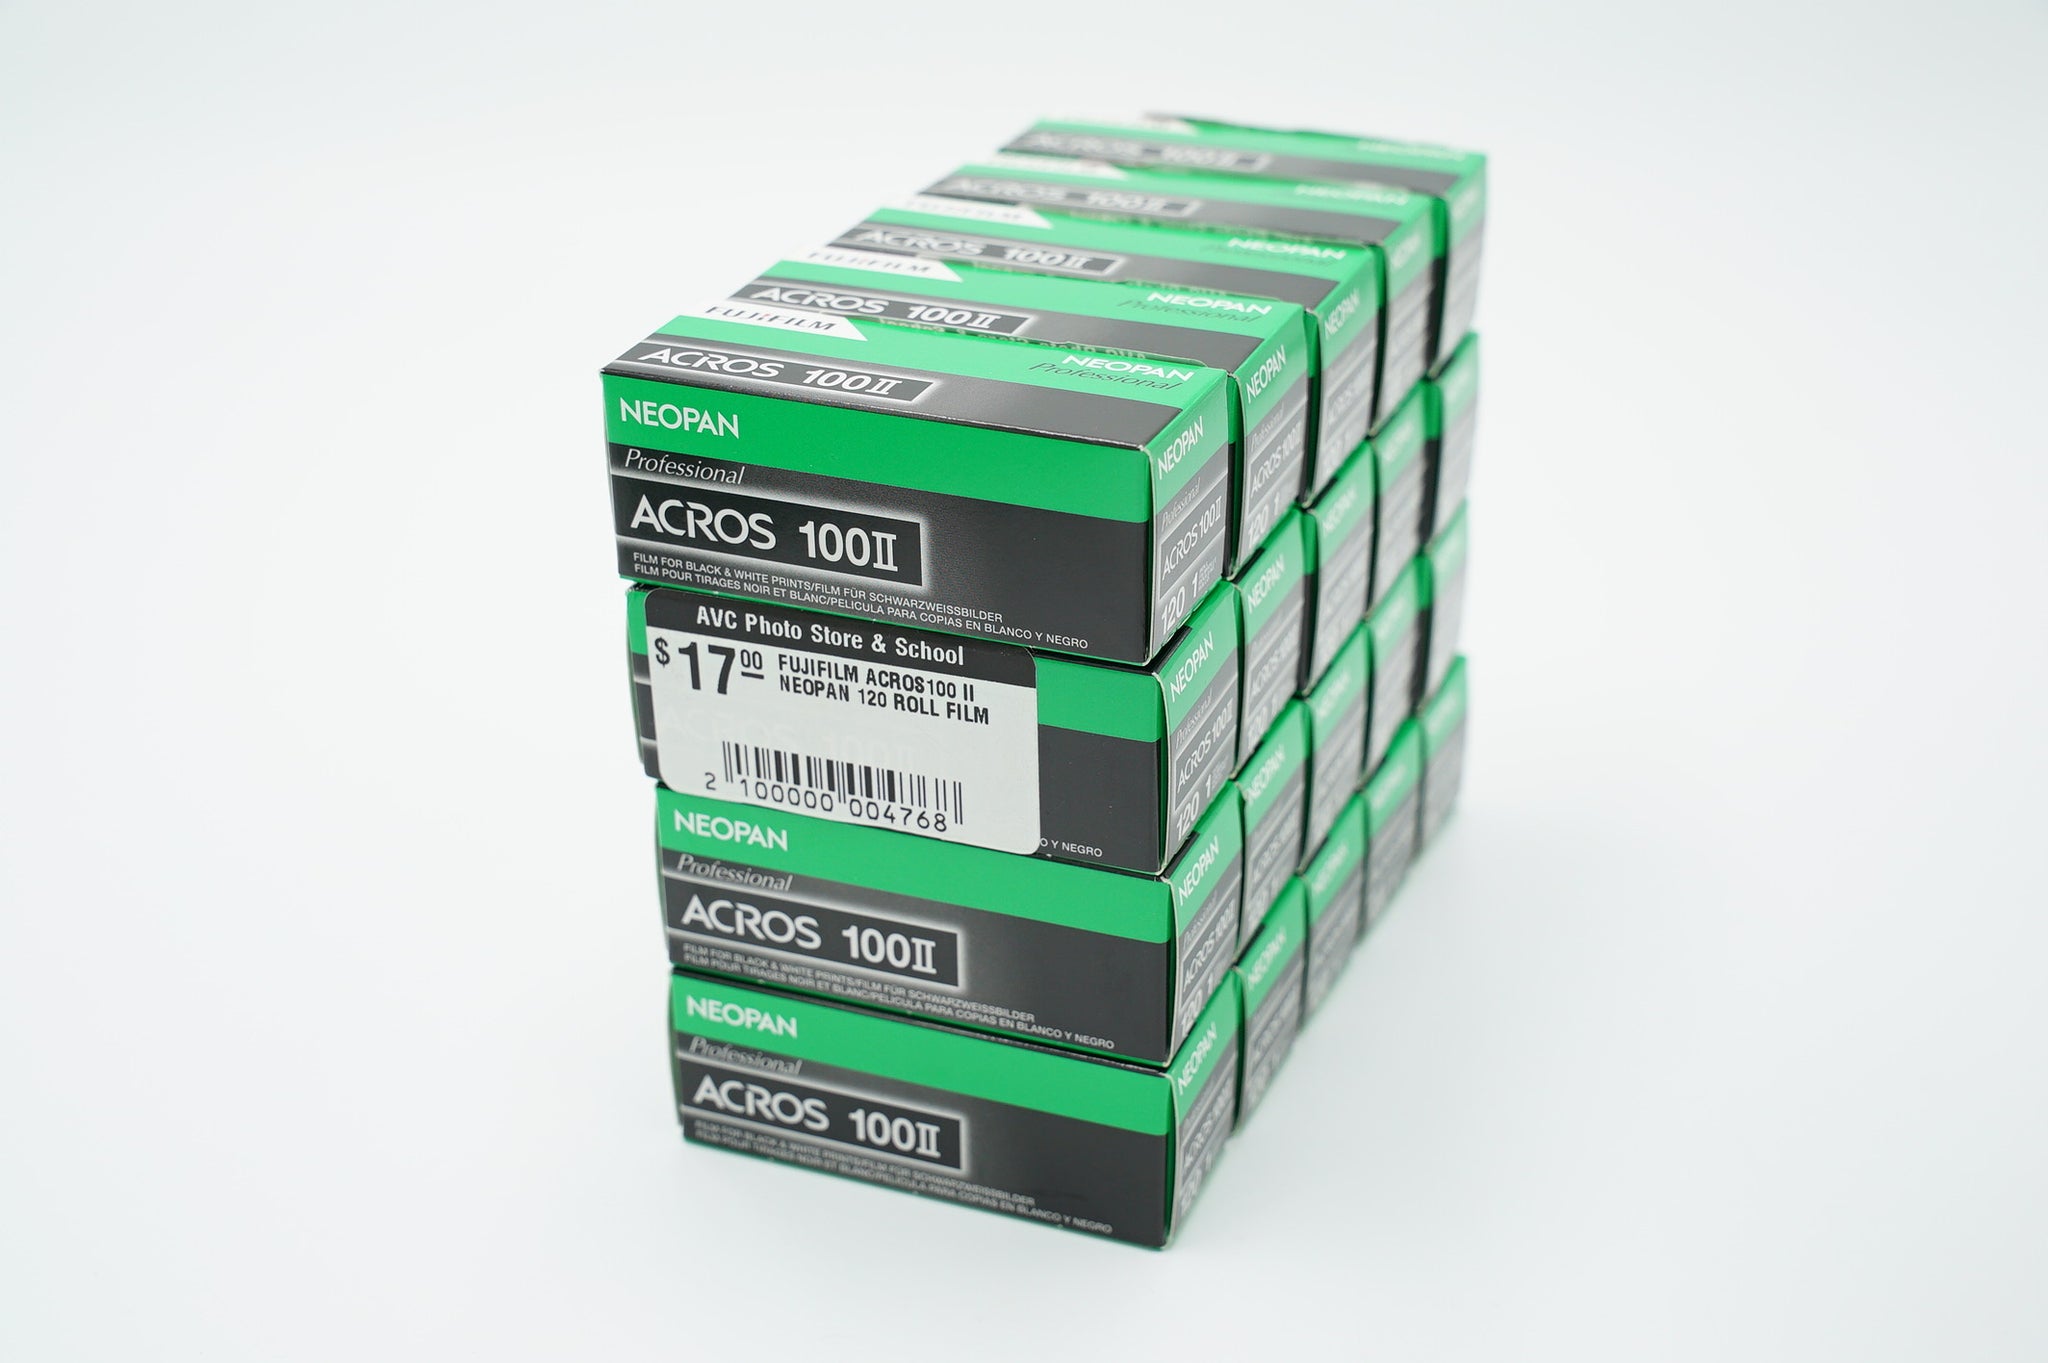 Fujifilm ACROS100 II Neopan 120 Roll Film (Expired 03/23), Bundle of 20